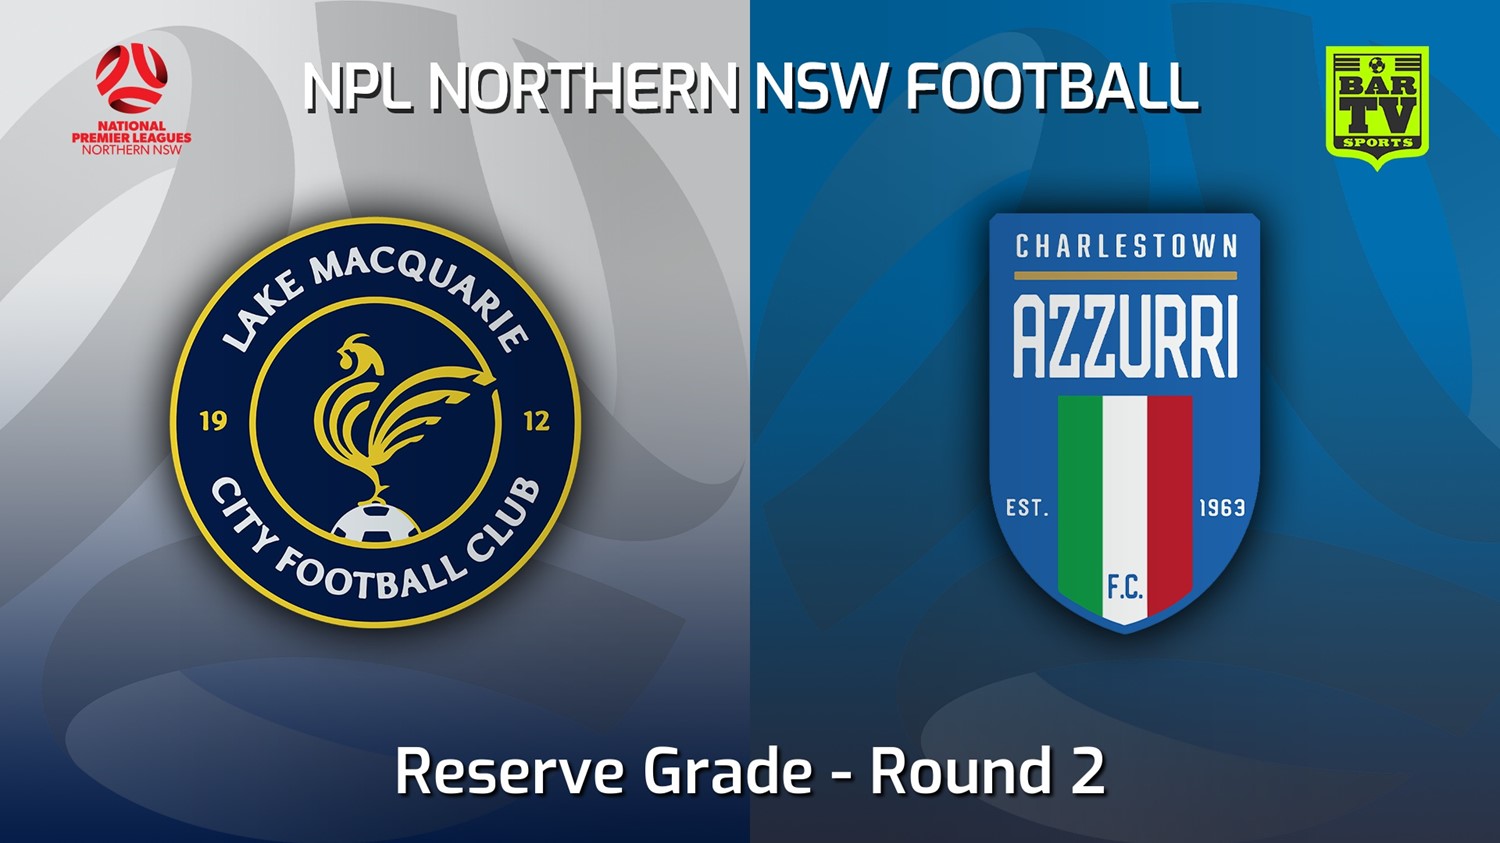 220313-NNSW NPL Res Round 2 - Lake Macquarie City FC Res v Charlestown Azzurri FC Res Minigame Slate Image